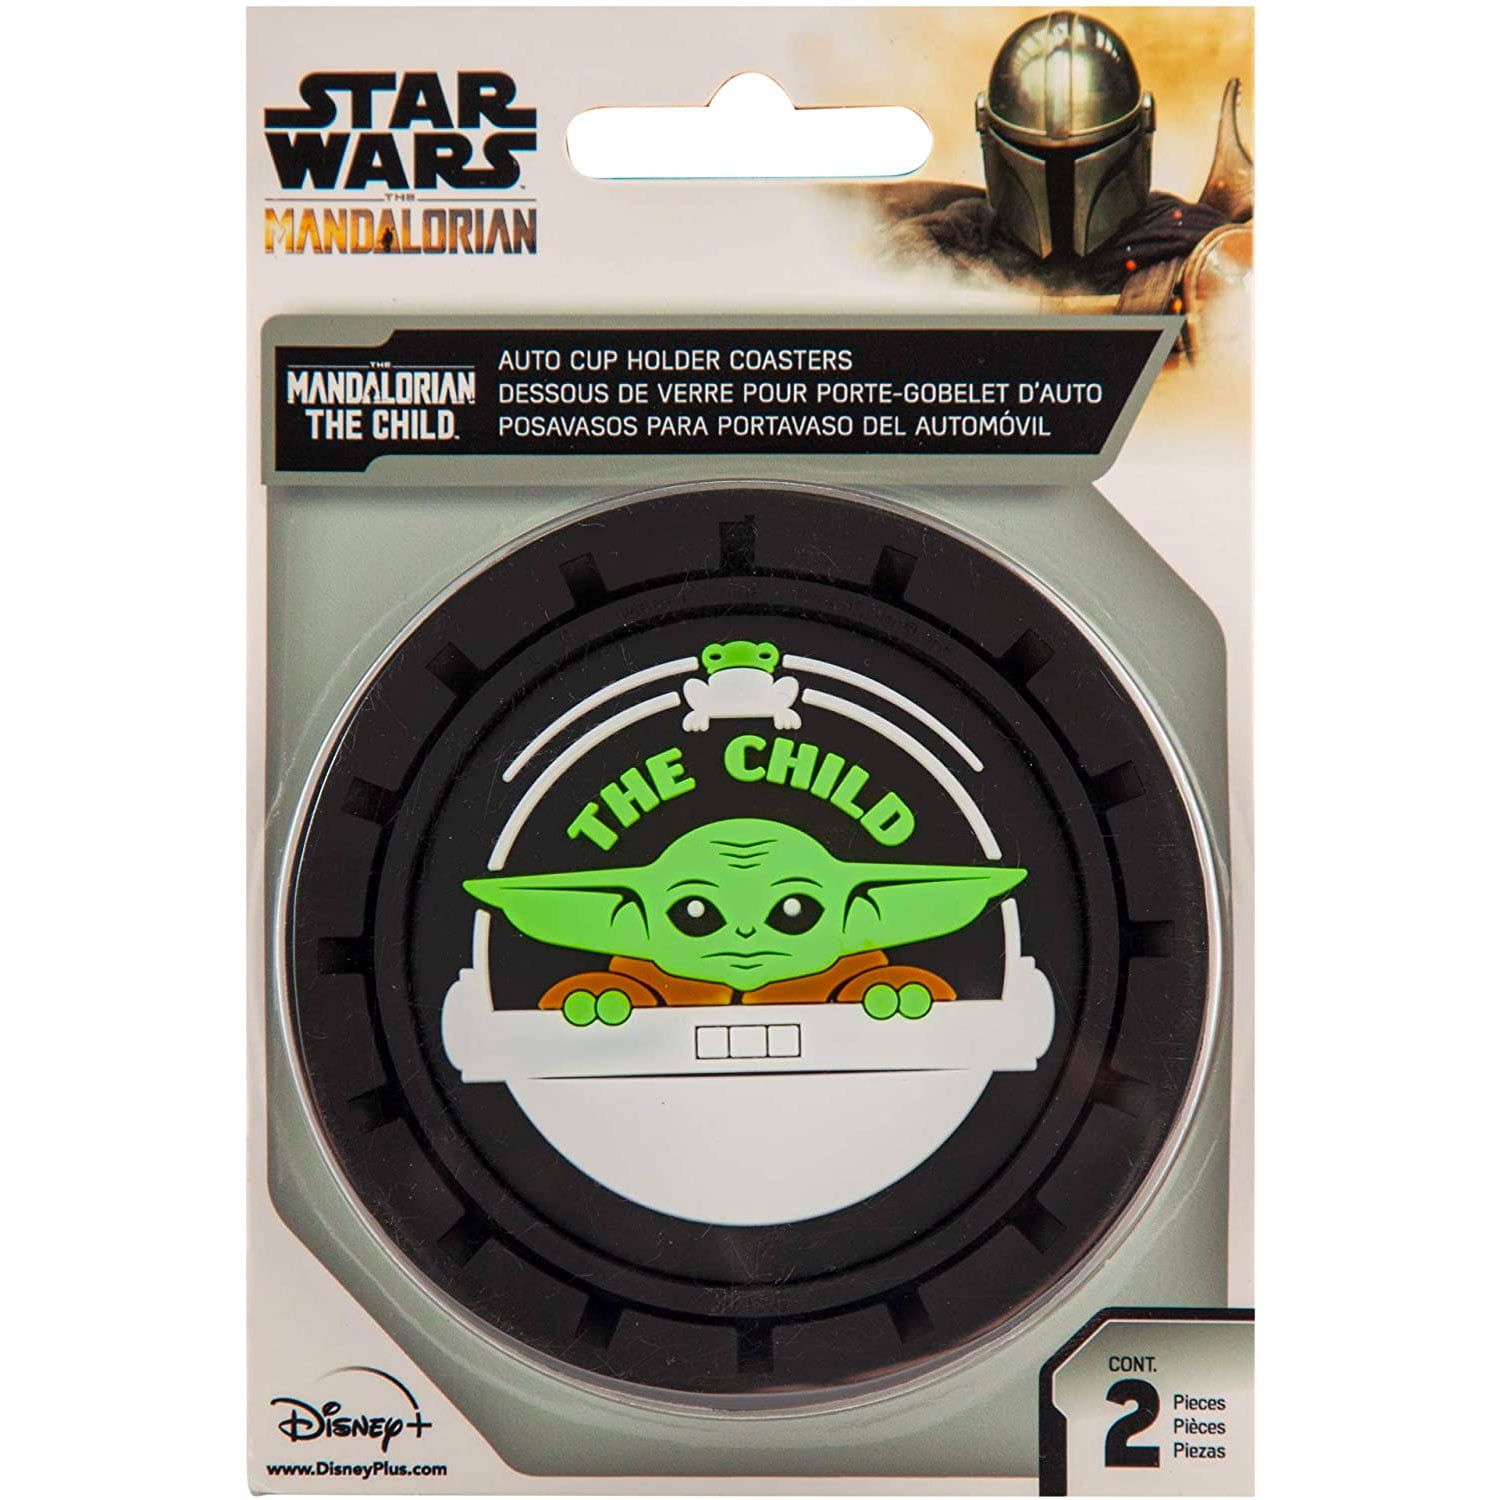 STAR WARS Yoda Coaster Ceramic Tile 